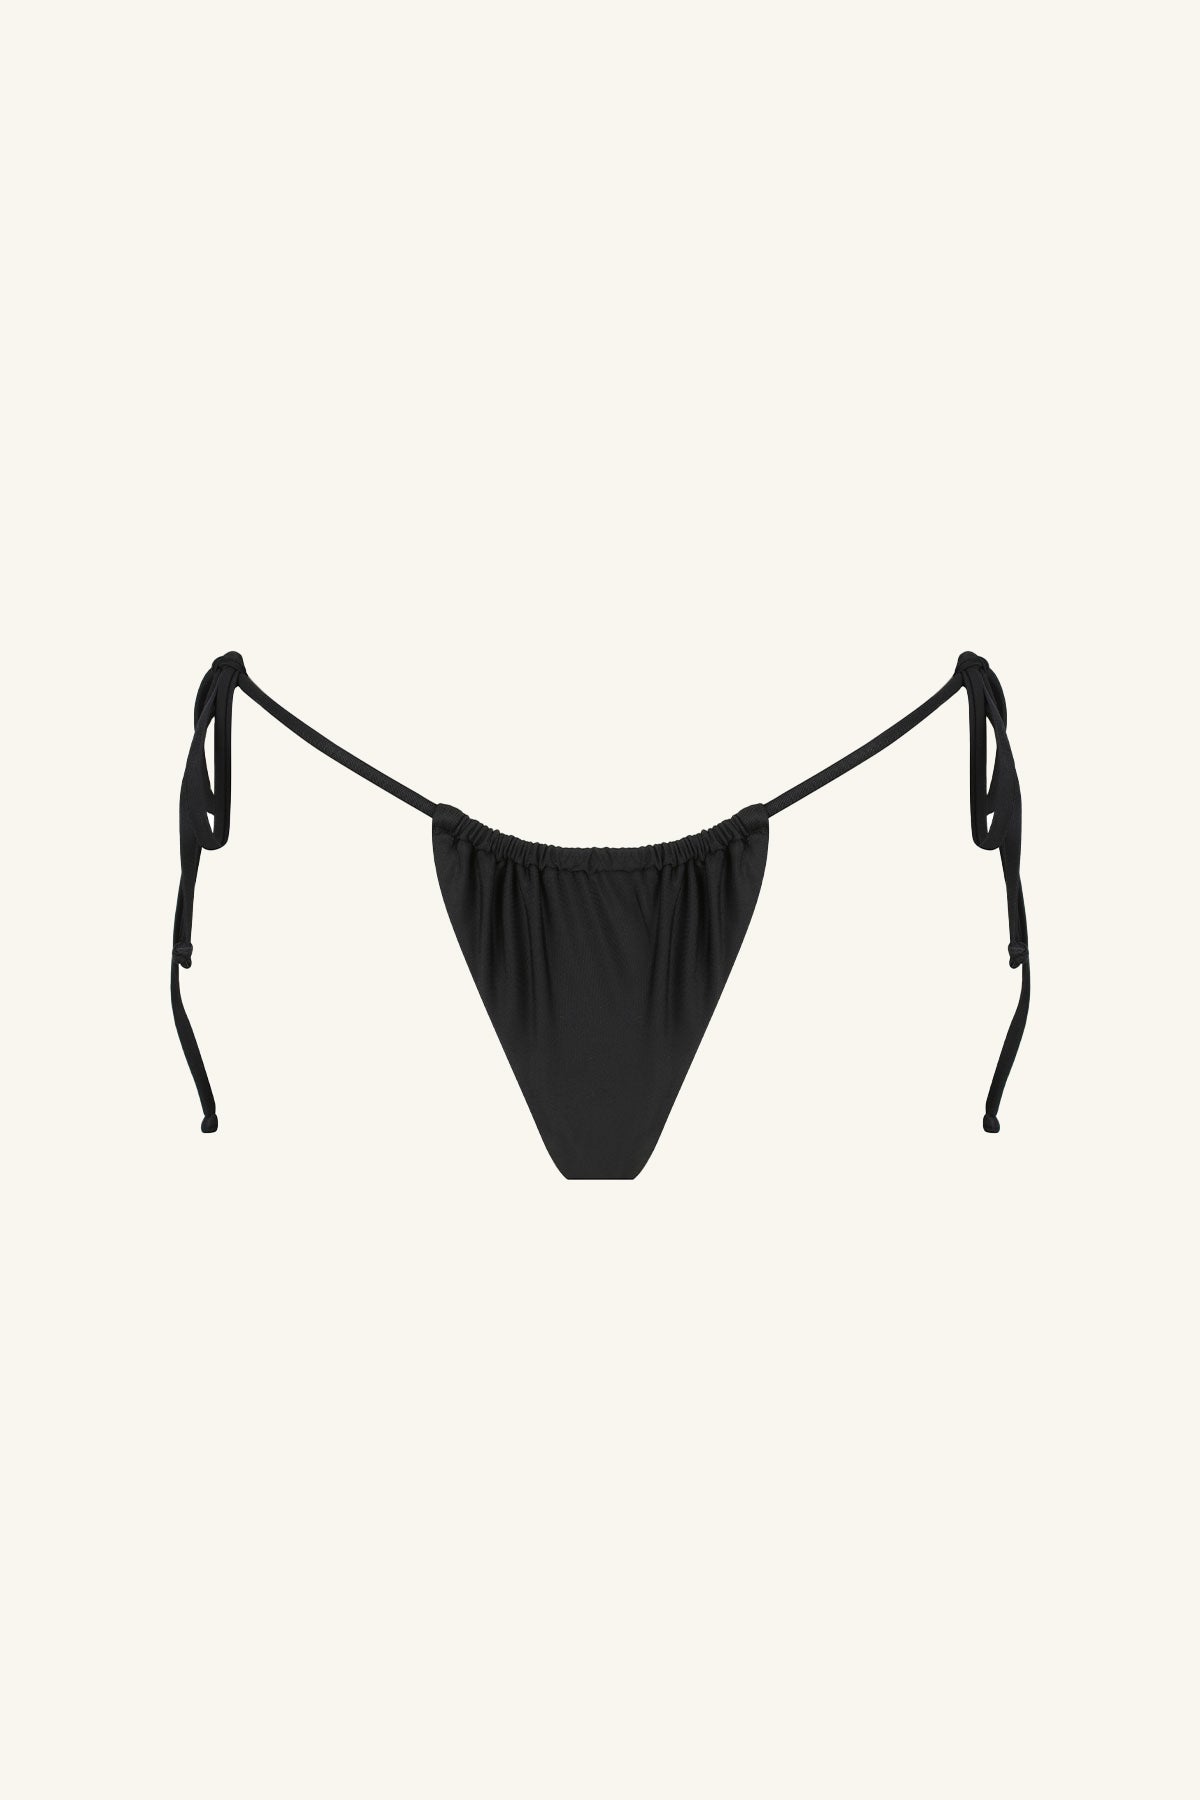 Shona Joy Daiquiri Tie String Bikini Bottom - Black